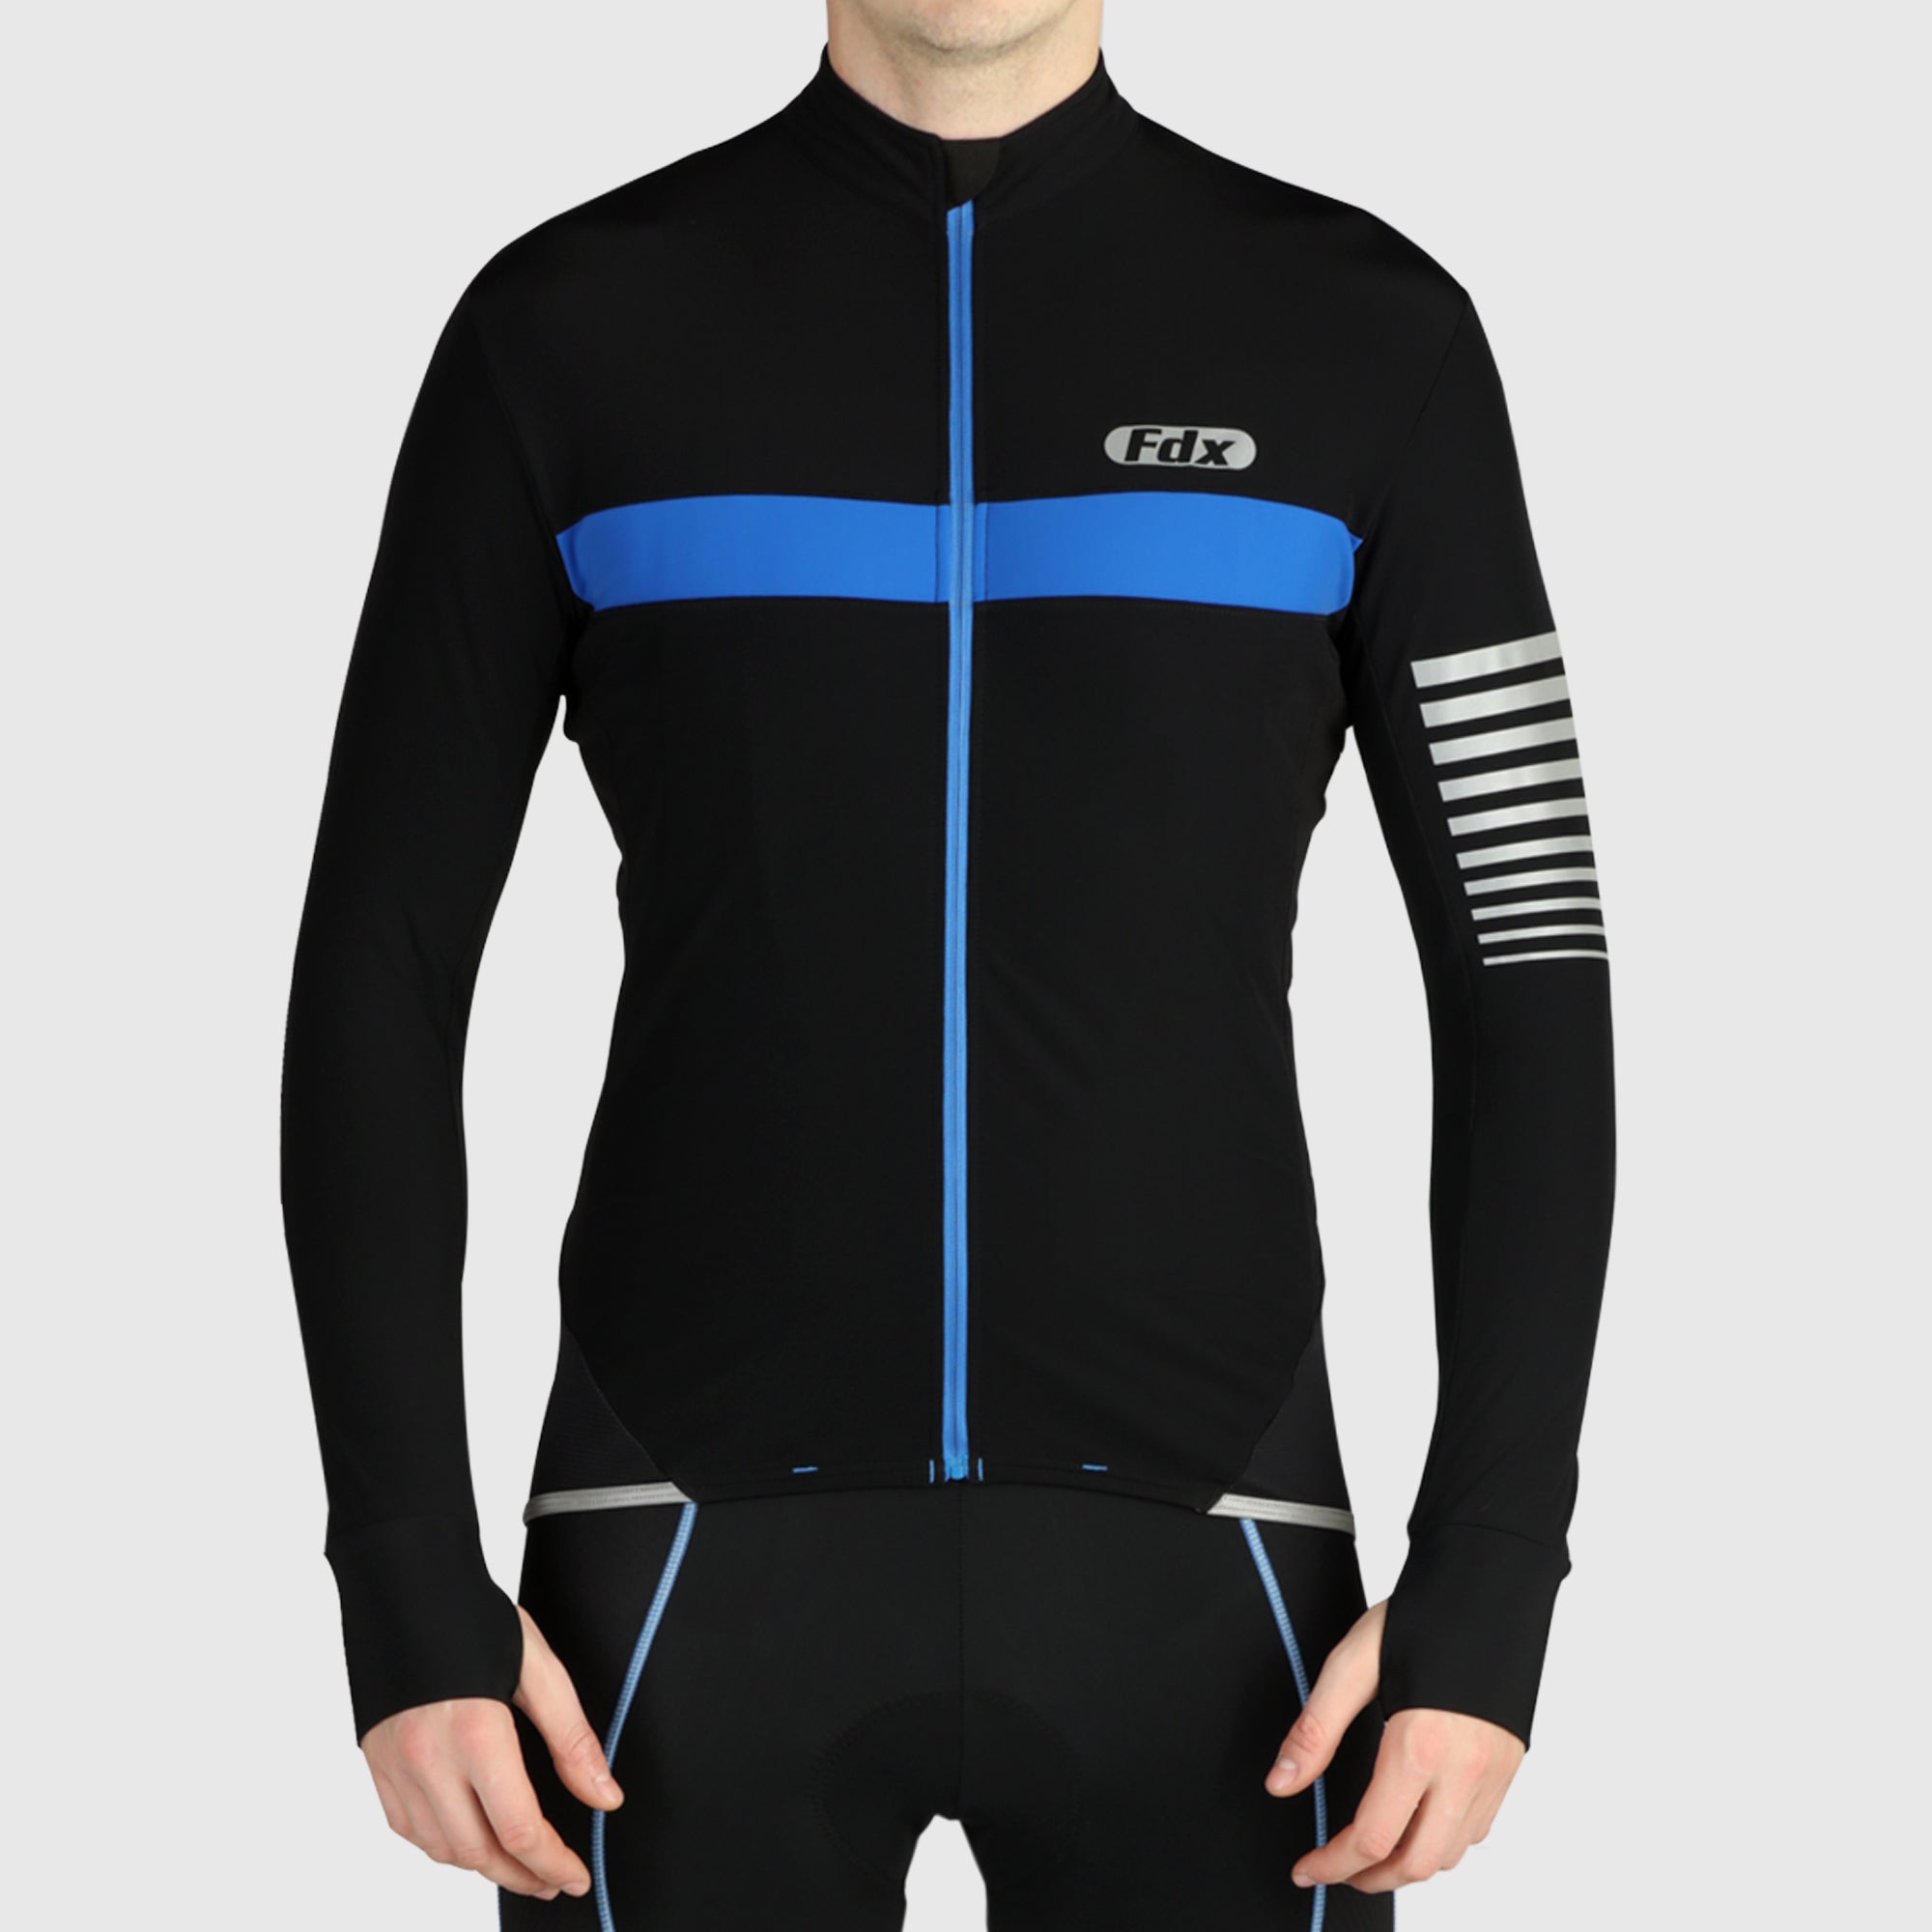 Fdx Mens Blue Long Sleeve Cycling Jersey for Winter Roubaix Thermal Fleece Road Bike Wear Top Full Zipper, Pockets & Hi-viz Reflectors - All Day